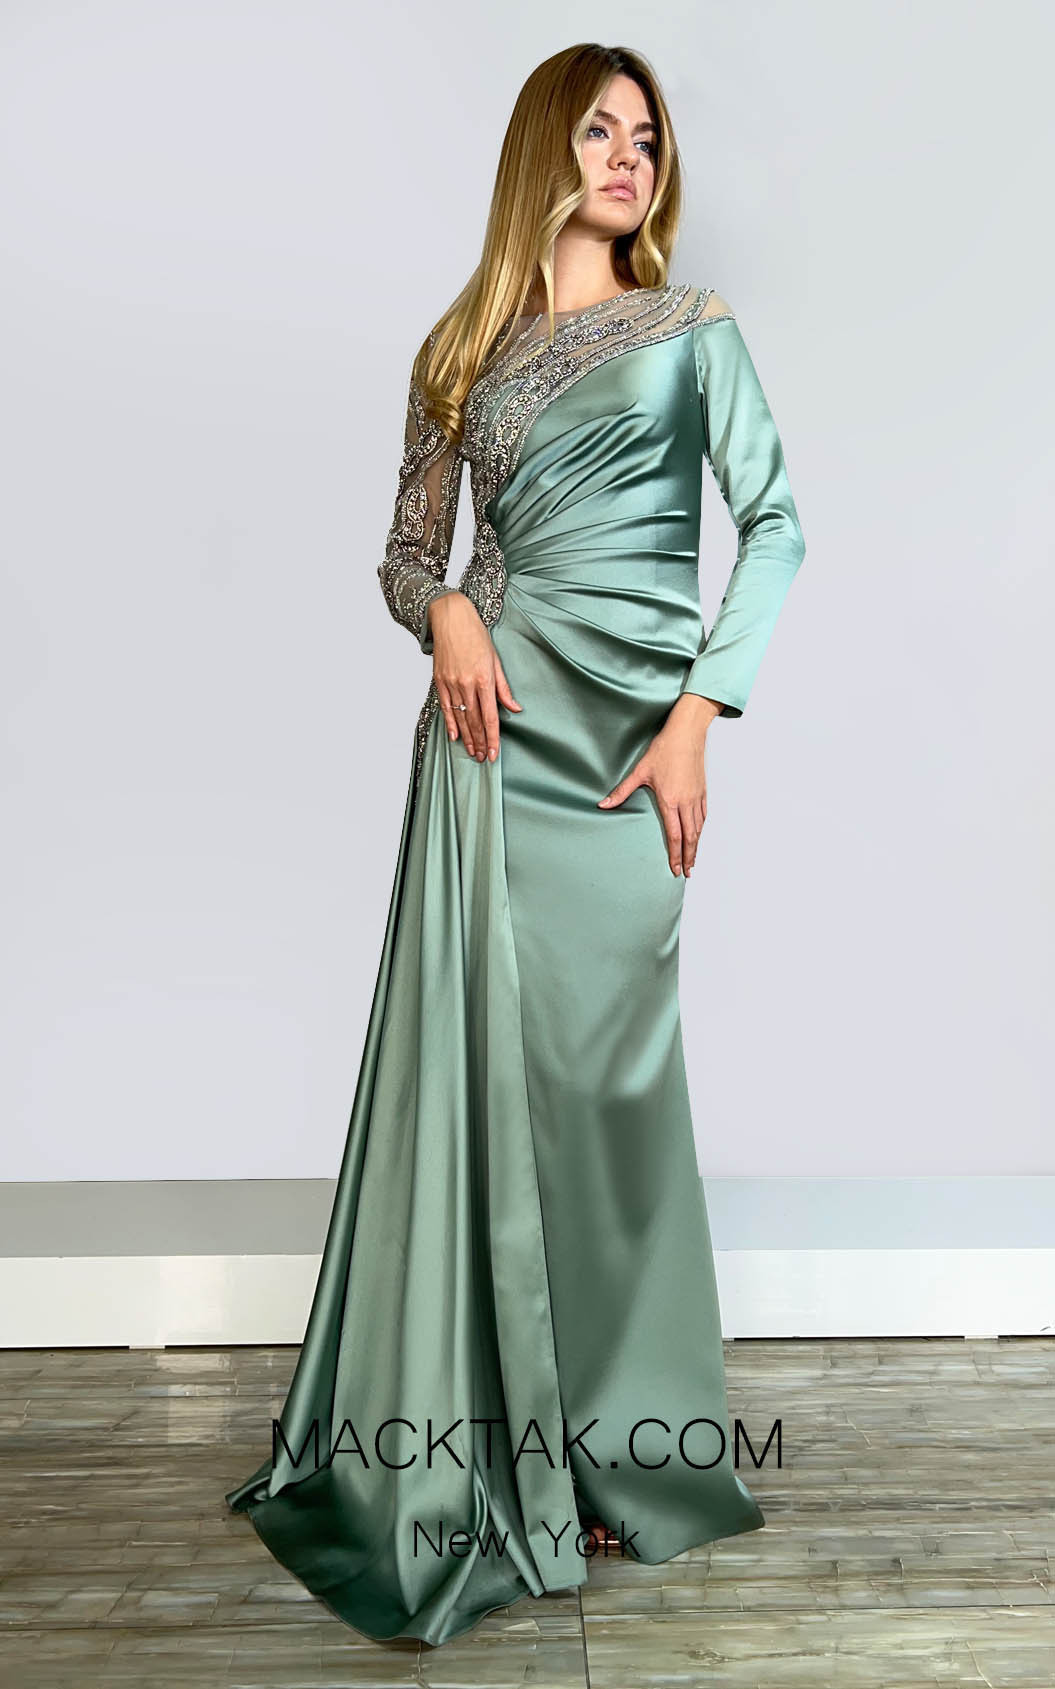 MackTak Collection 7313 Dress